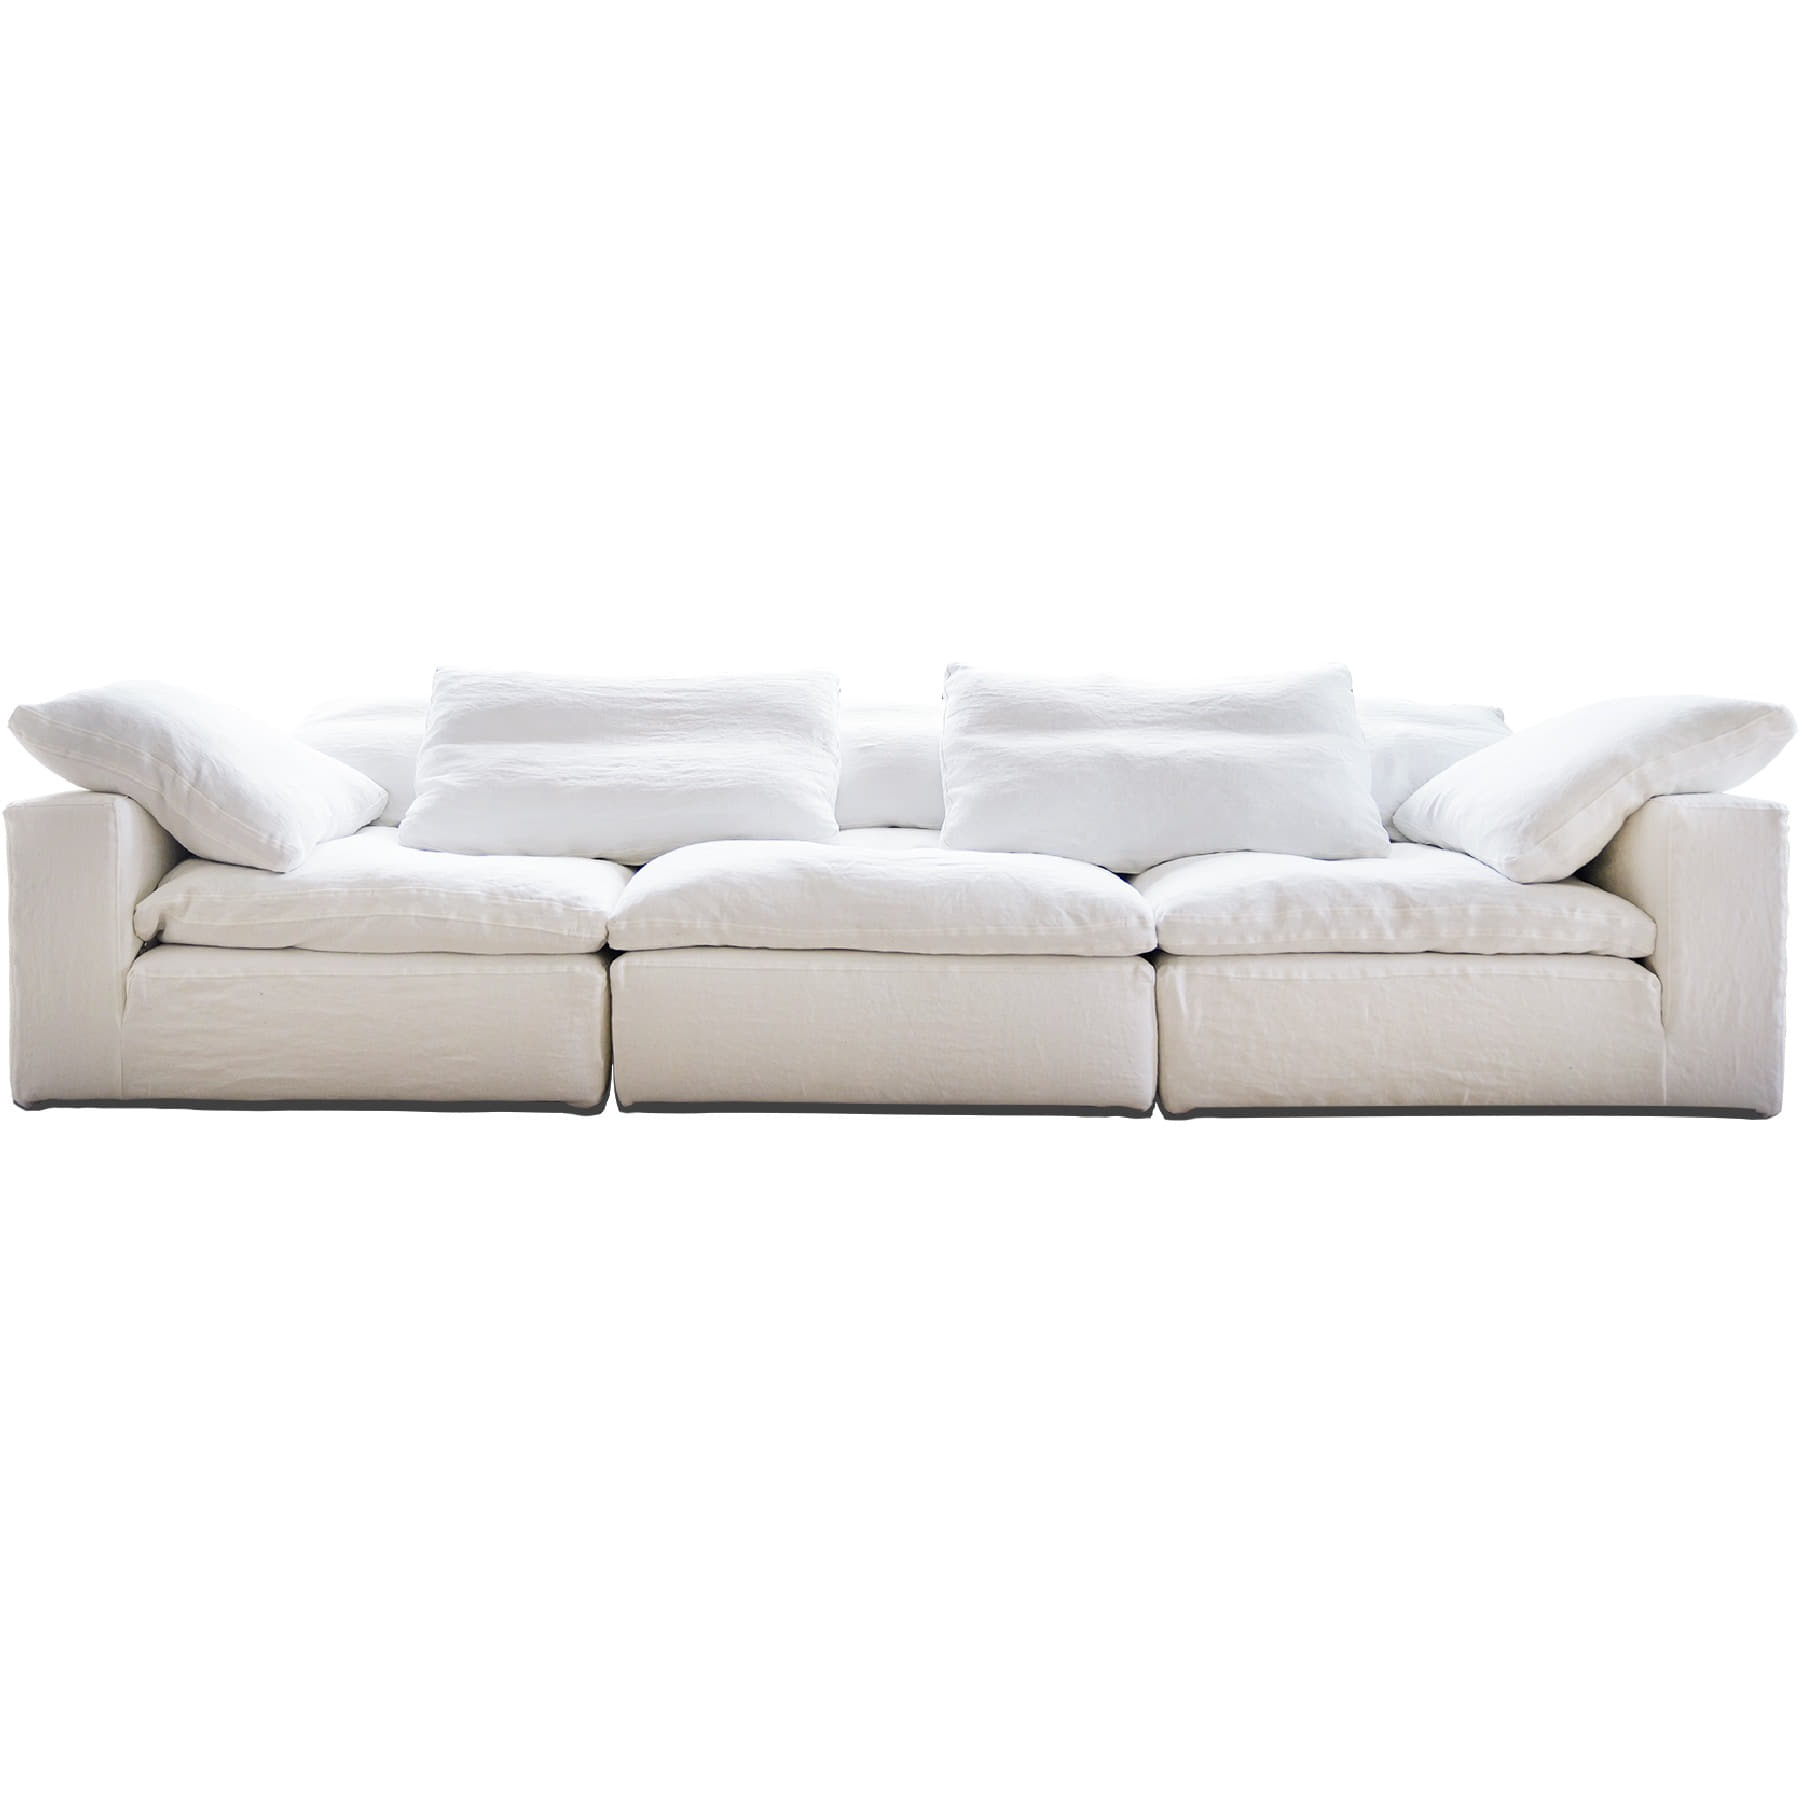 French sofa_linen white